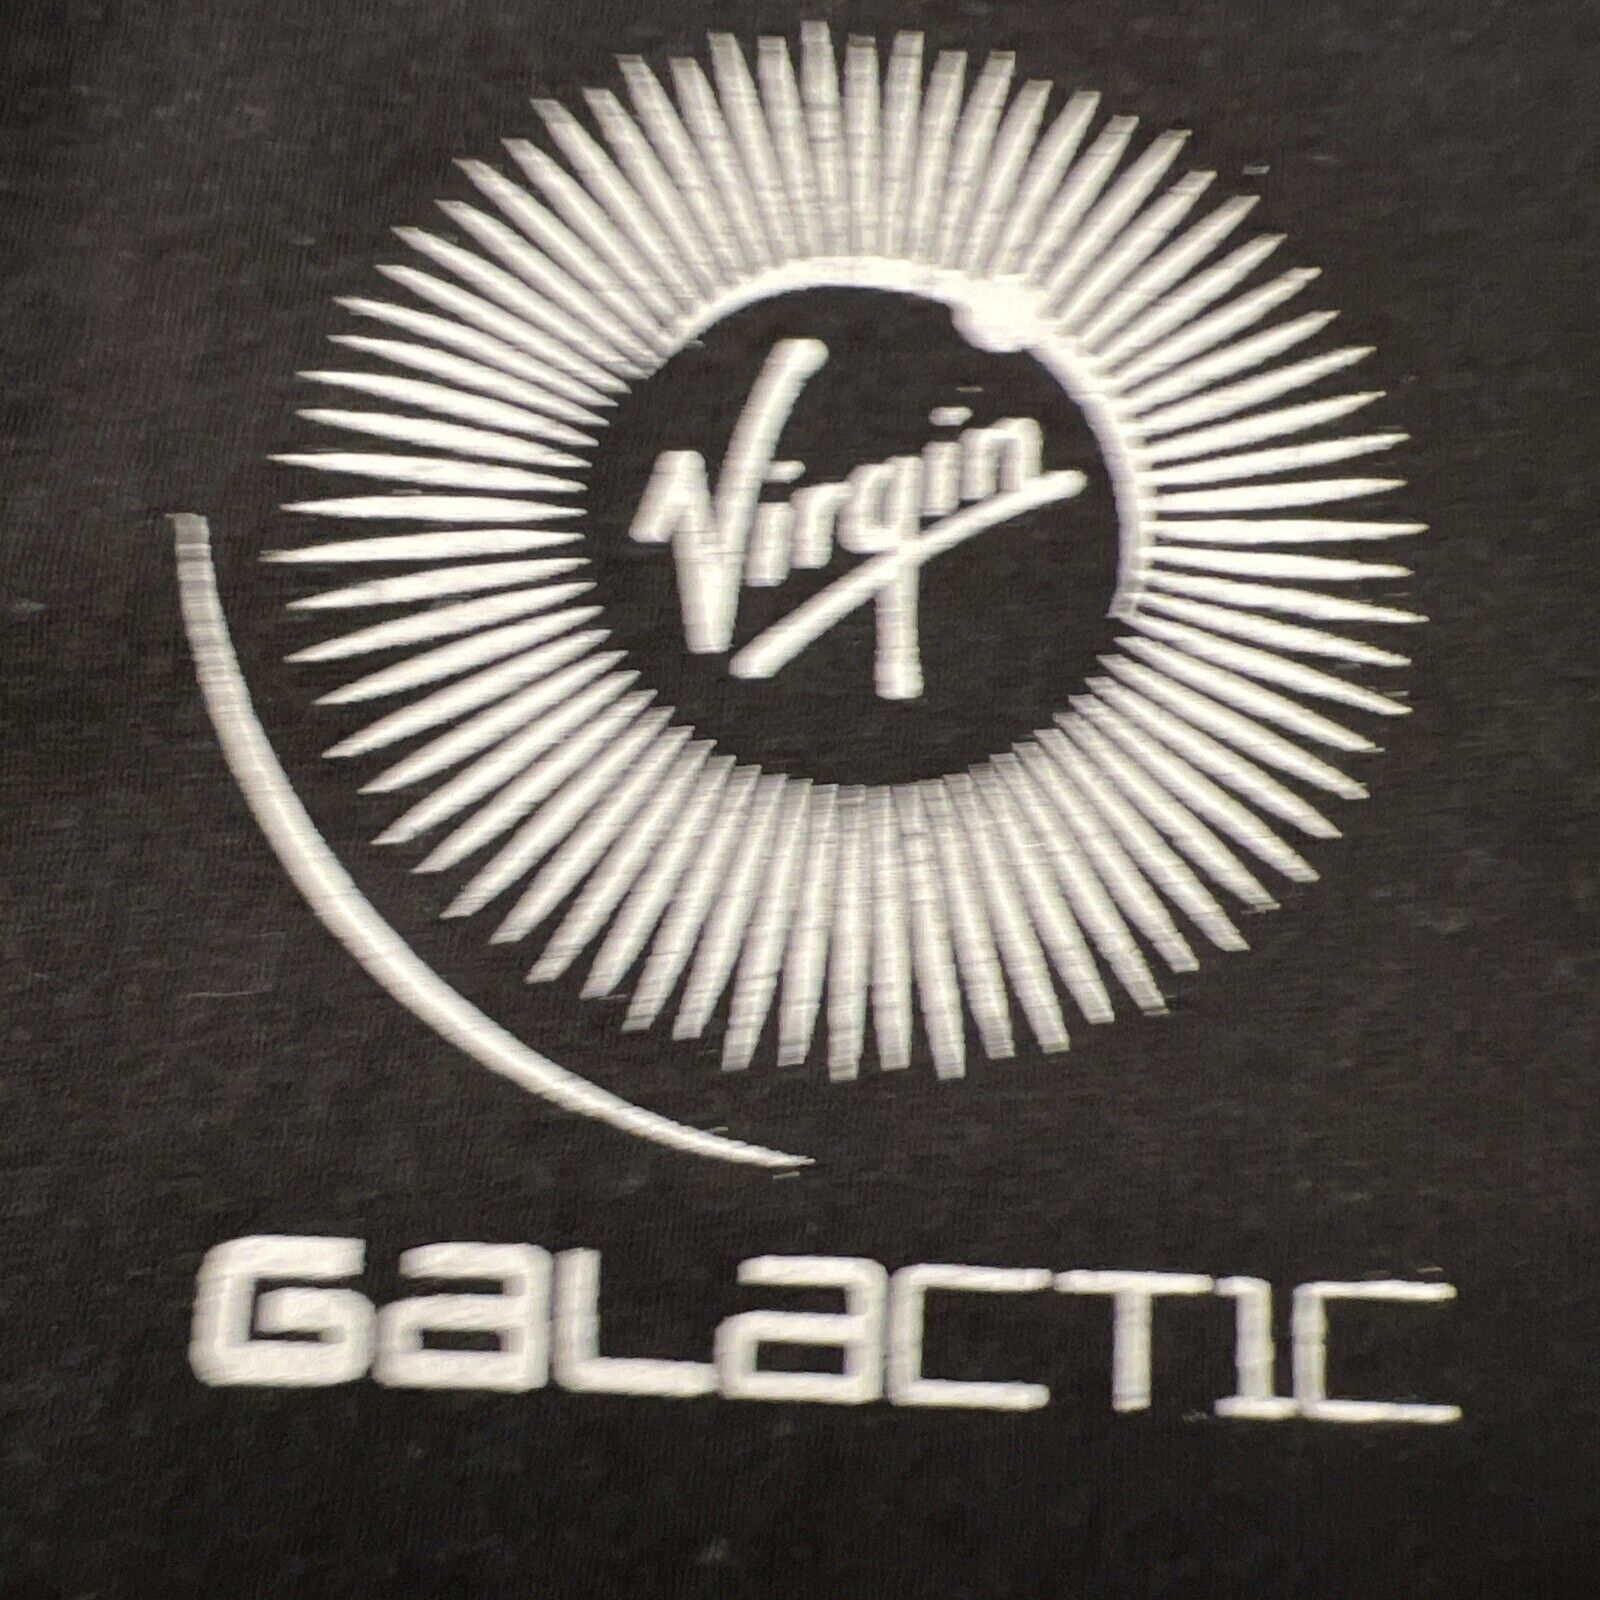 NWOT Virgin Galactic Space Exploration Planes Shirt Medium Black Richard Branson